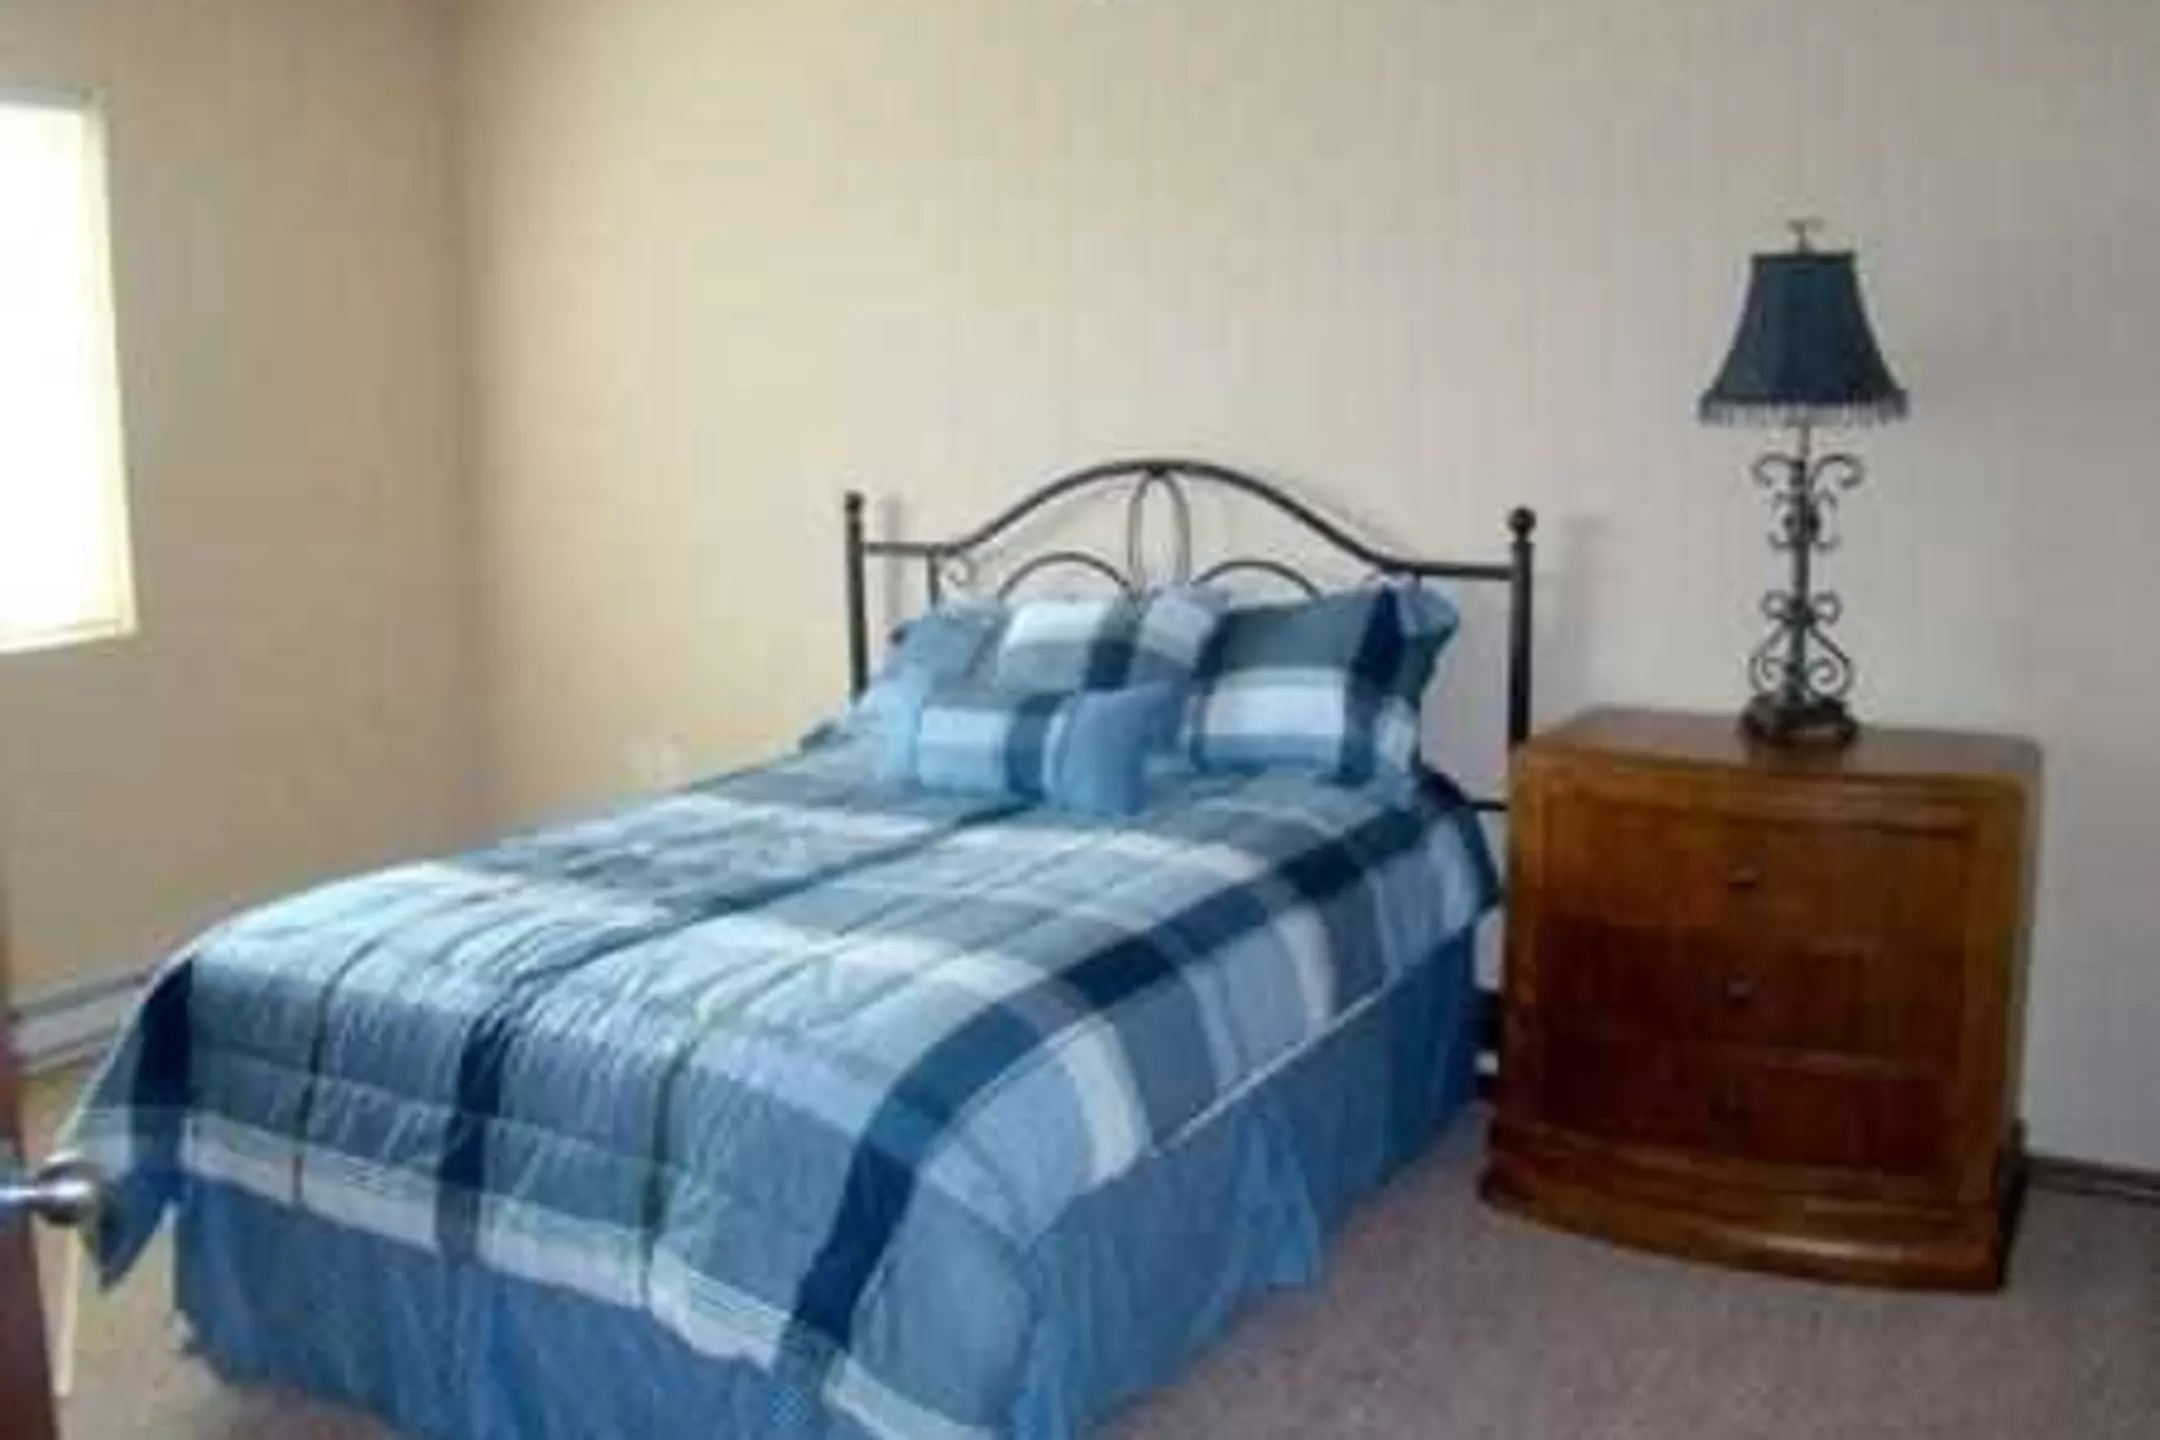 Bedroom - Mirada Manor Apartments - Sioux Falls, SD